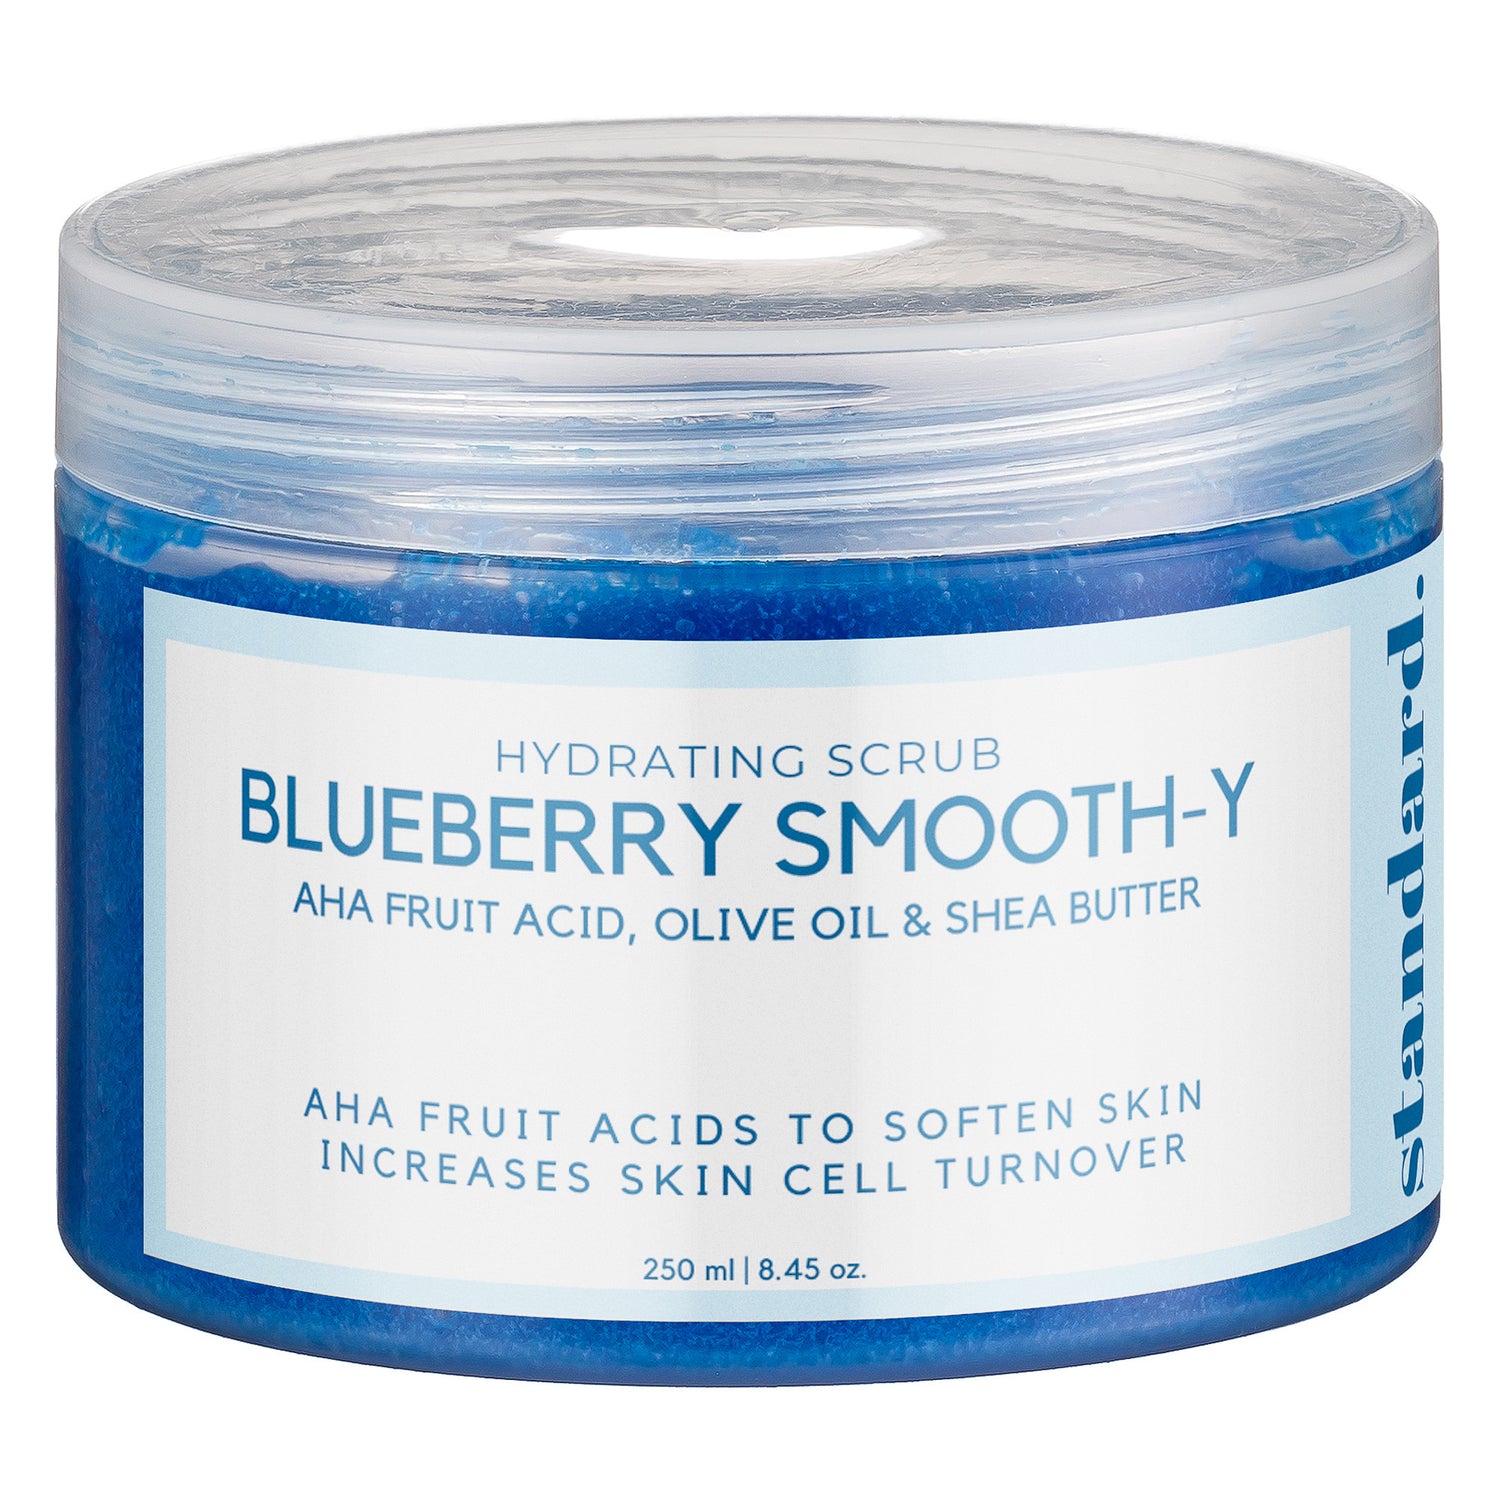 Blueberry Smooth-y Scrub with AHA Fruit Acids